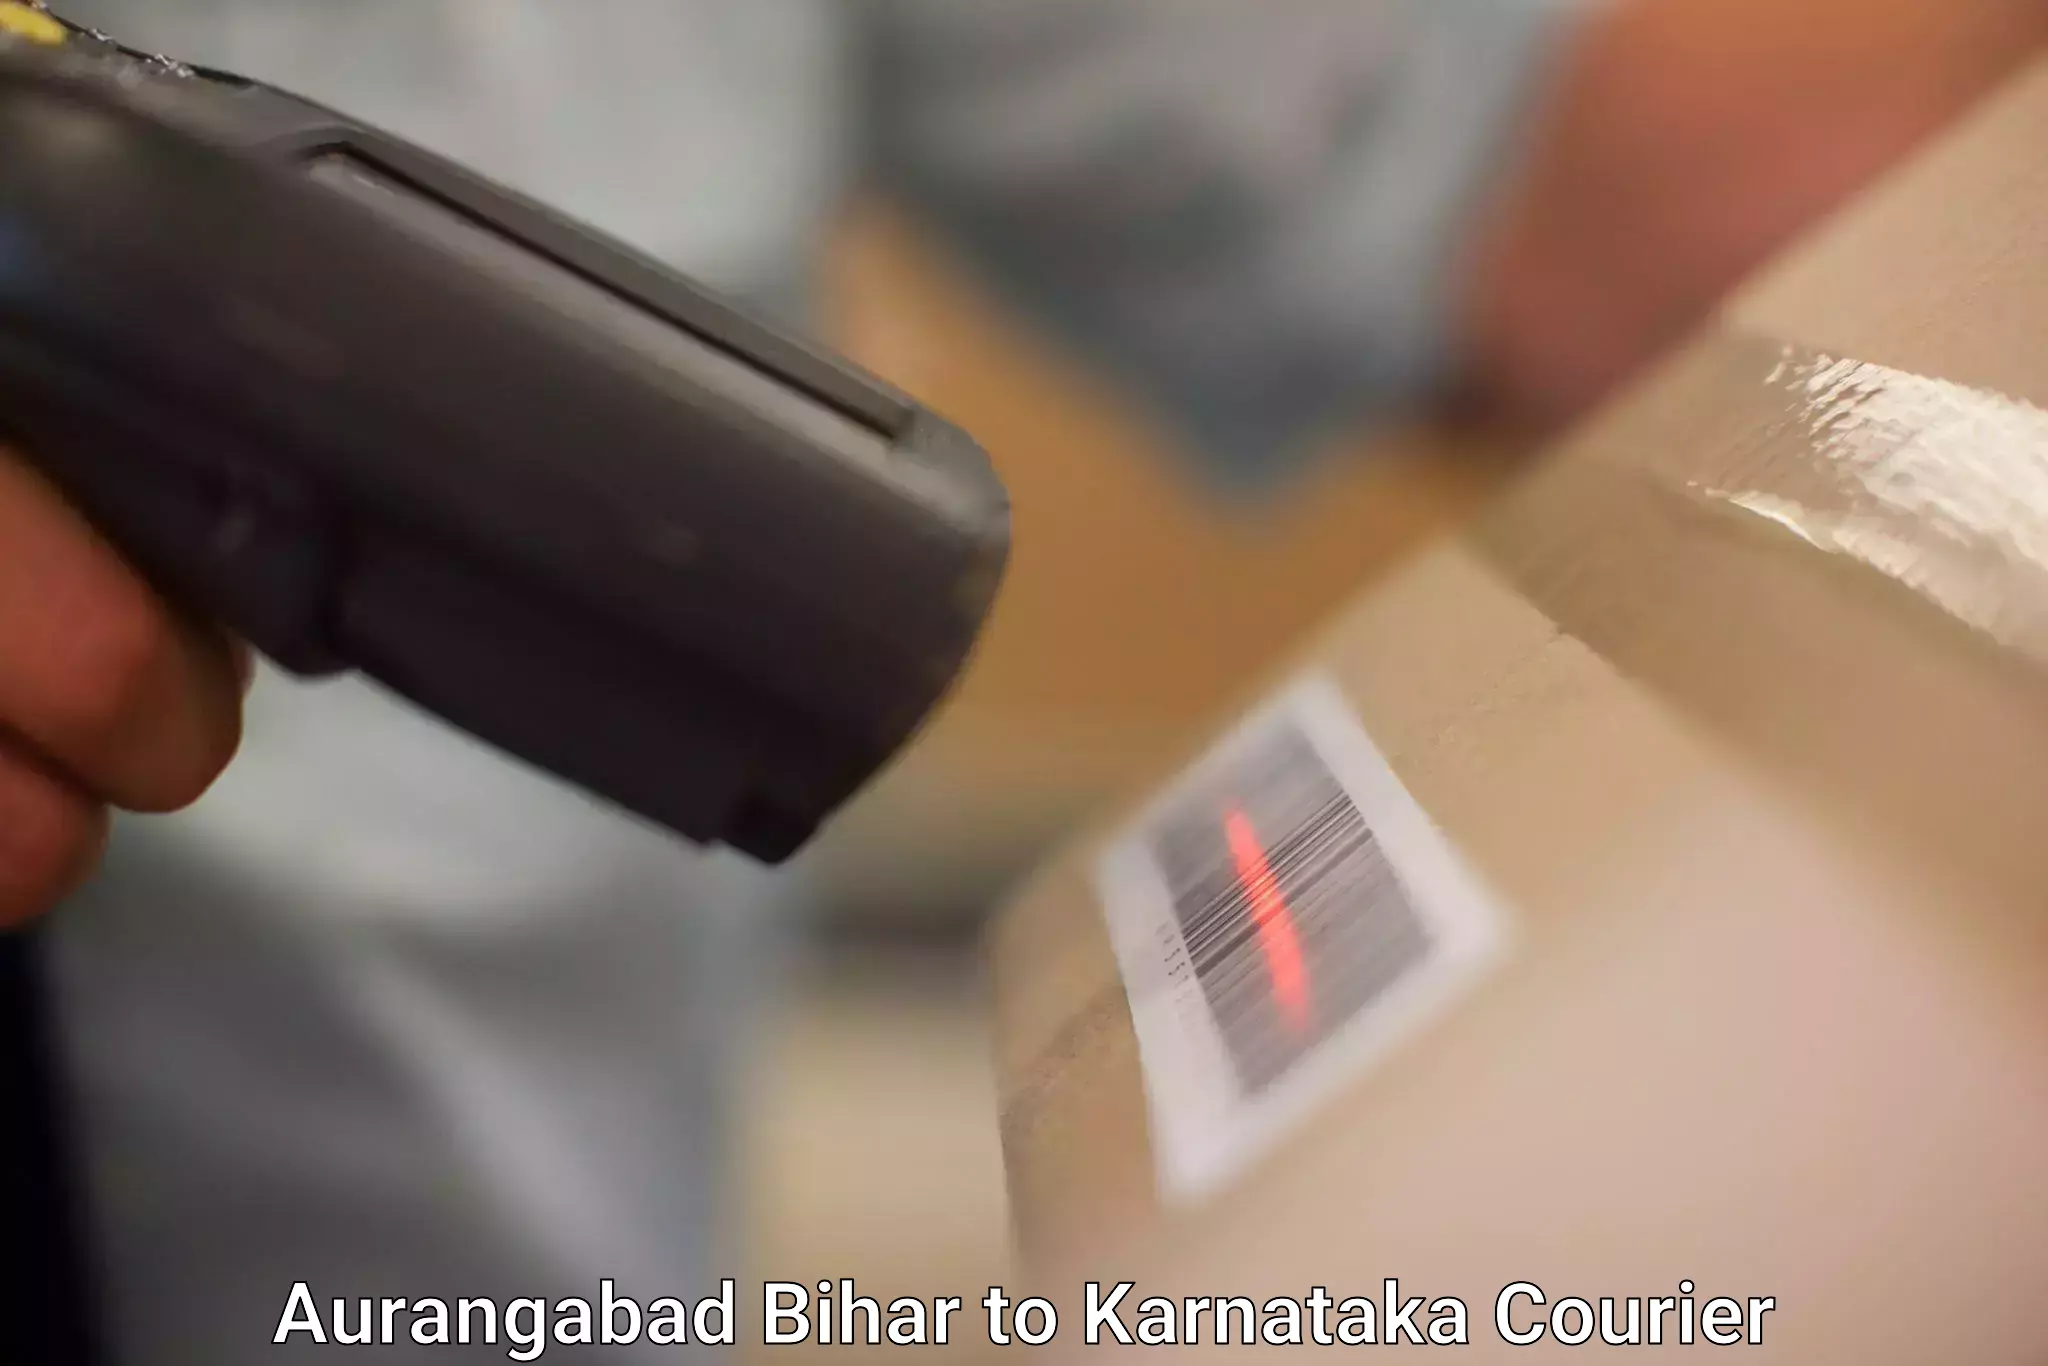 Expedited parcel delivery Aurangabad Bihar to Thirthahalli